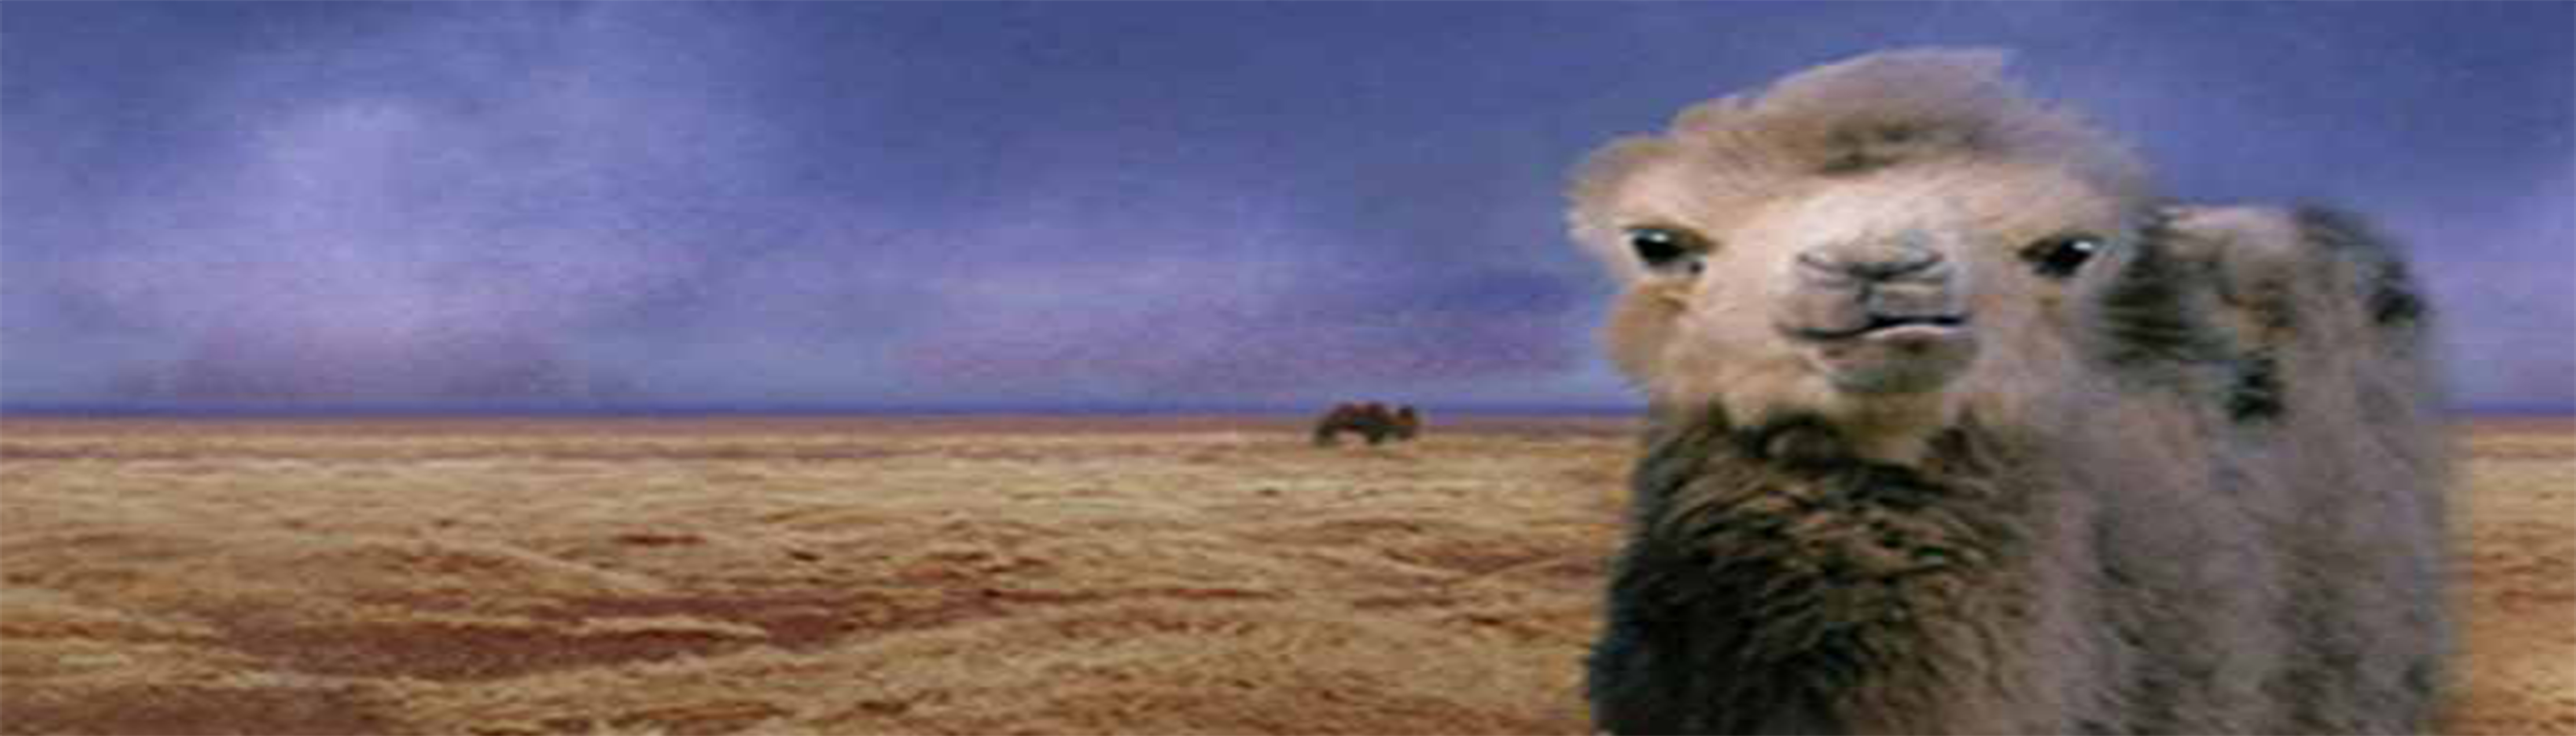 دانلود فیلم مستند The Story of the Weeping Camel 2003